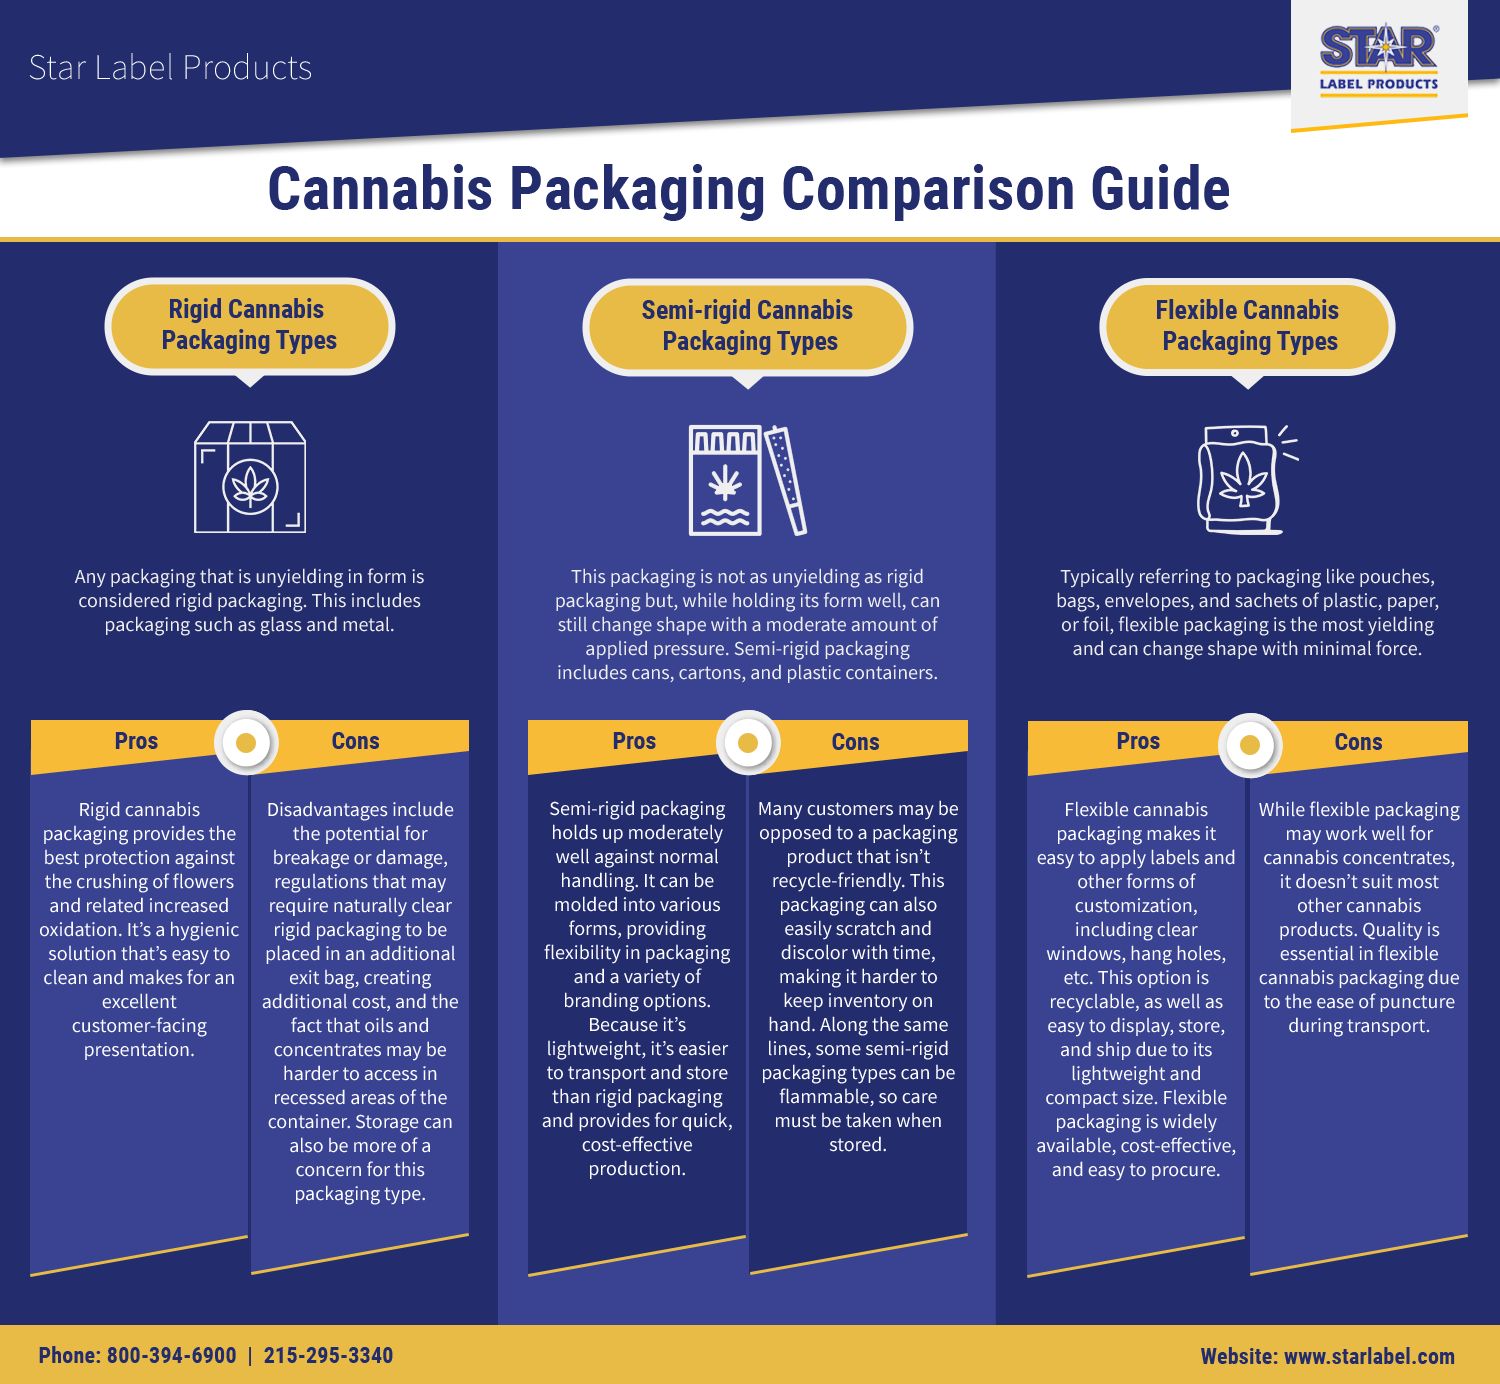 Cannabis Package Comparison Guide